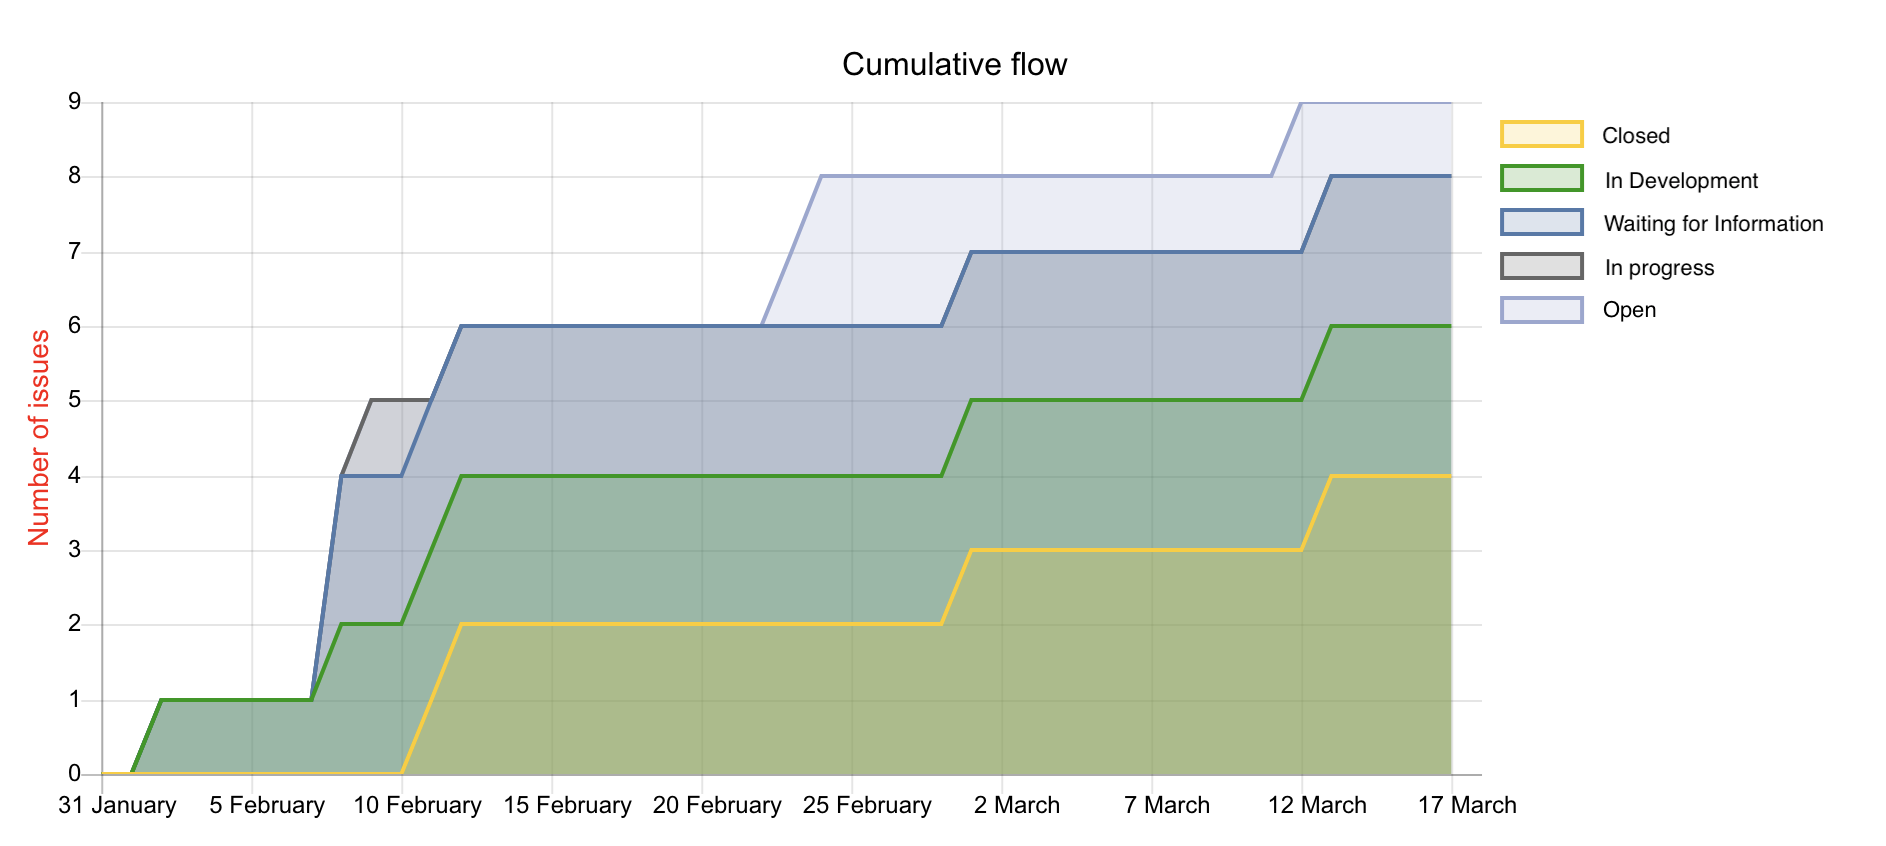 Cumulative flow charts